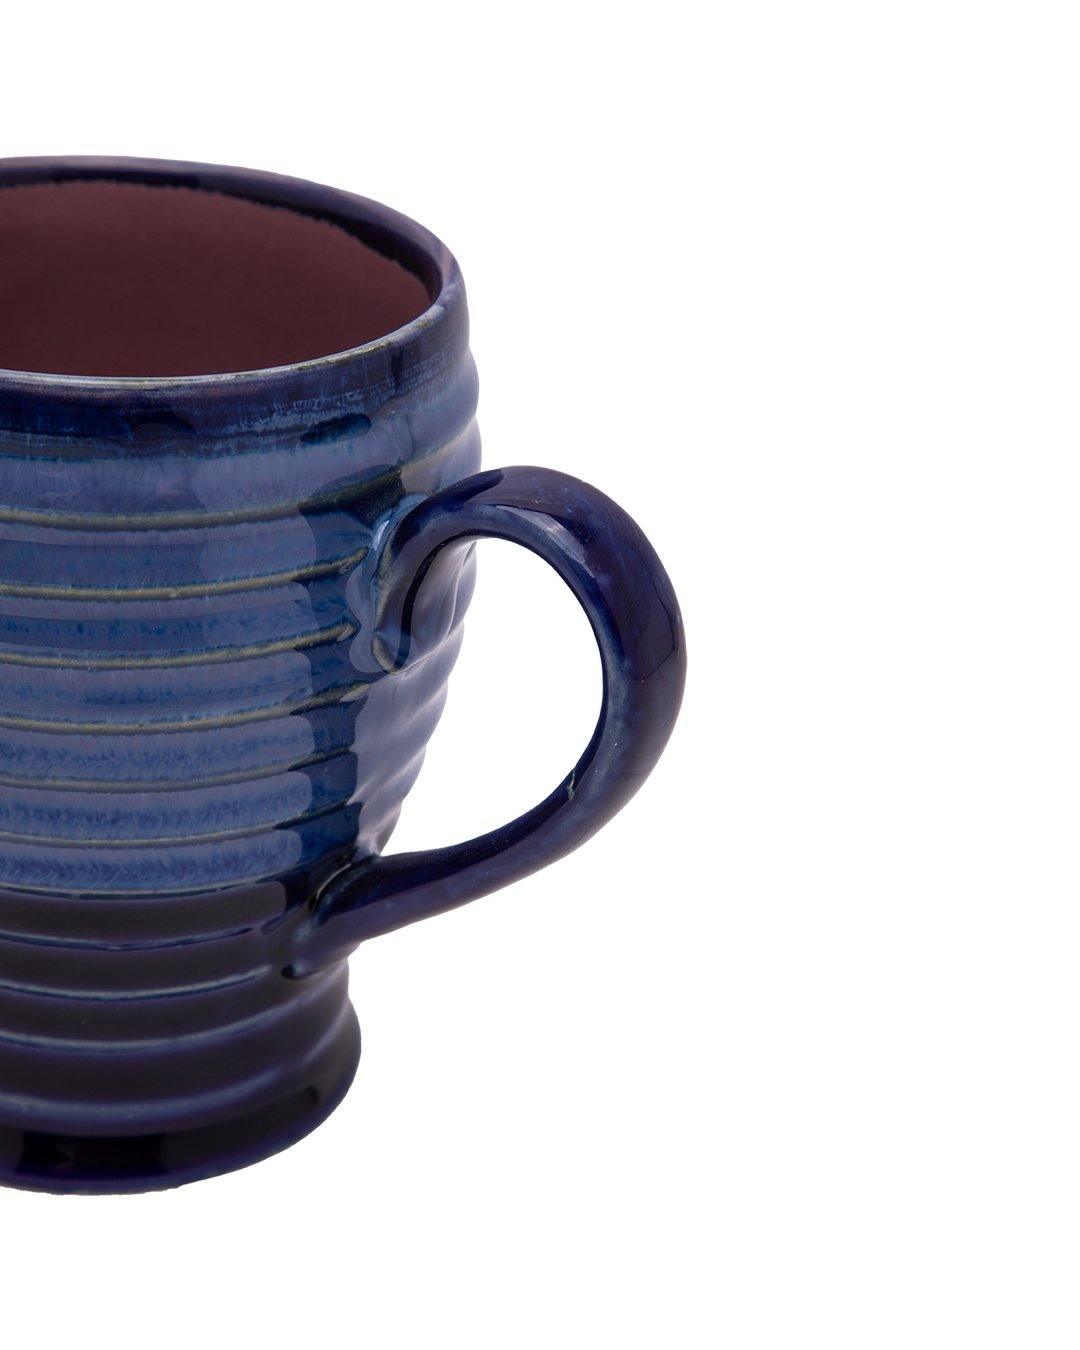 Studio Pottery Mug, Blue & Purple, Ceramic, 300 mL - MARKET 99